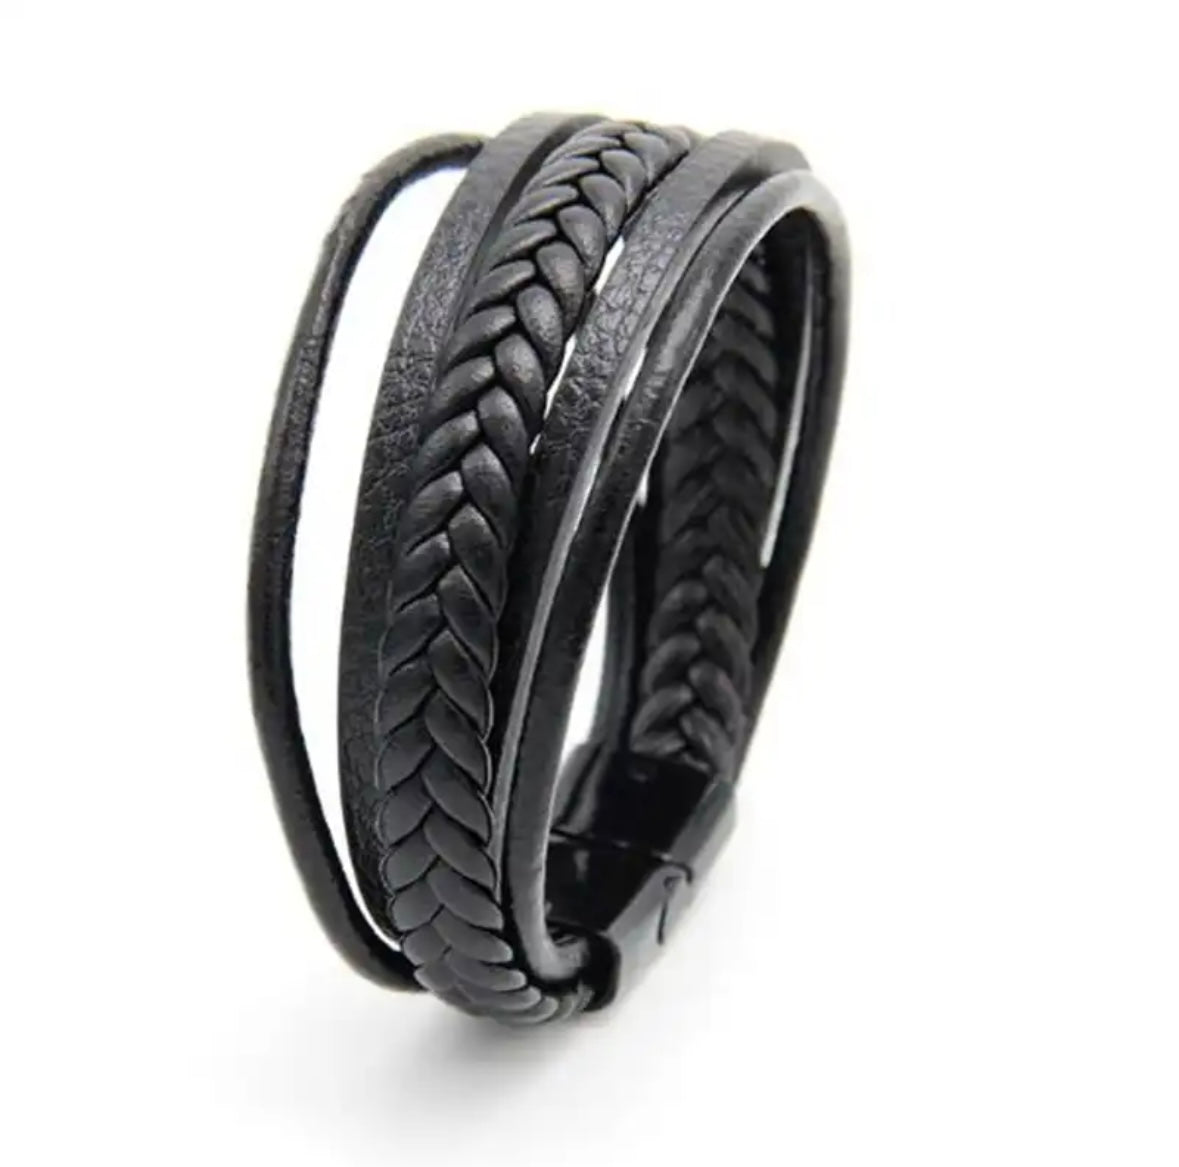 Colossus Black Leather Bracelet